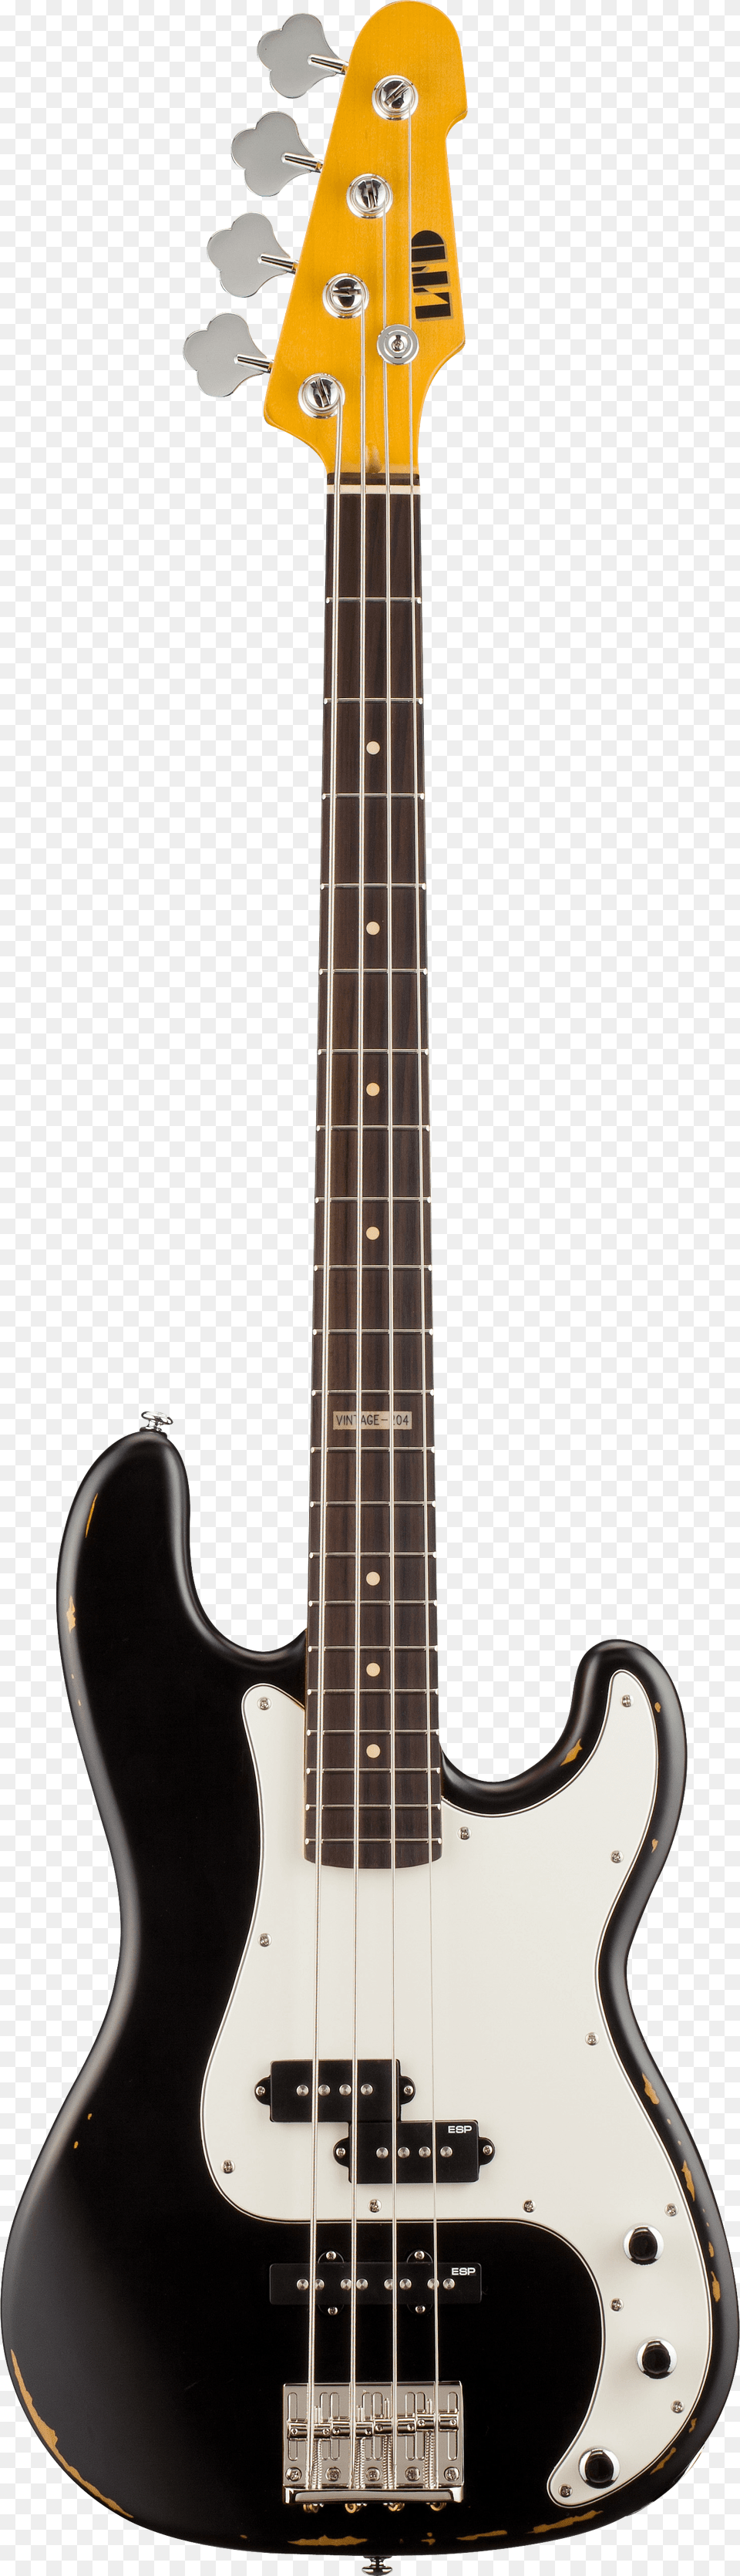 Electric Guitar Bass Guitar, Musical Instrument Png Image